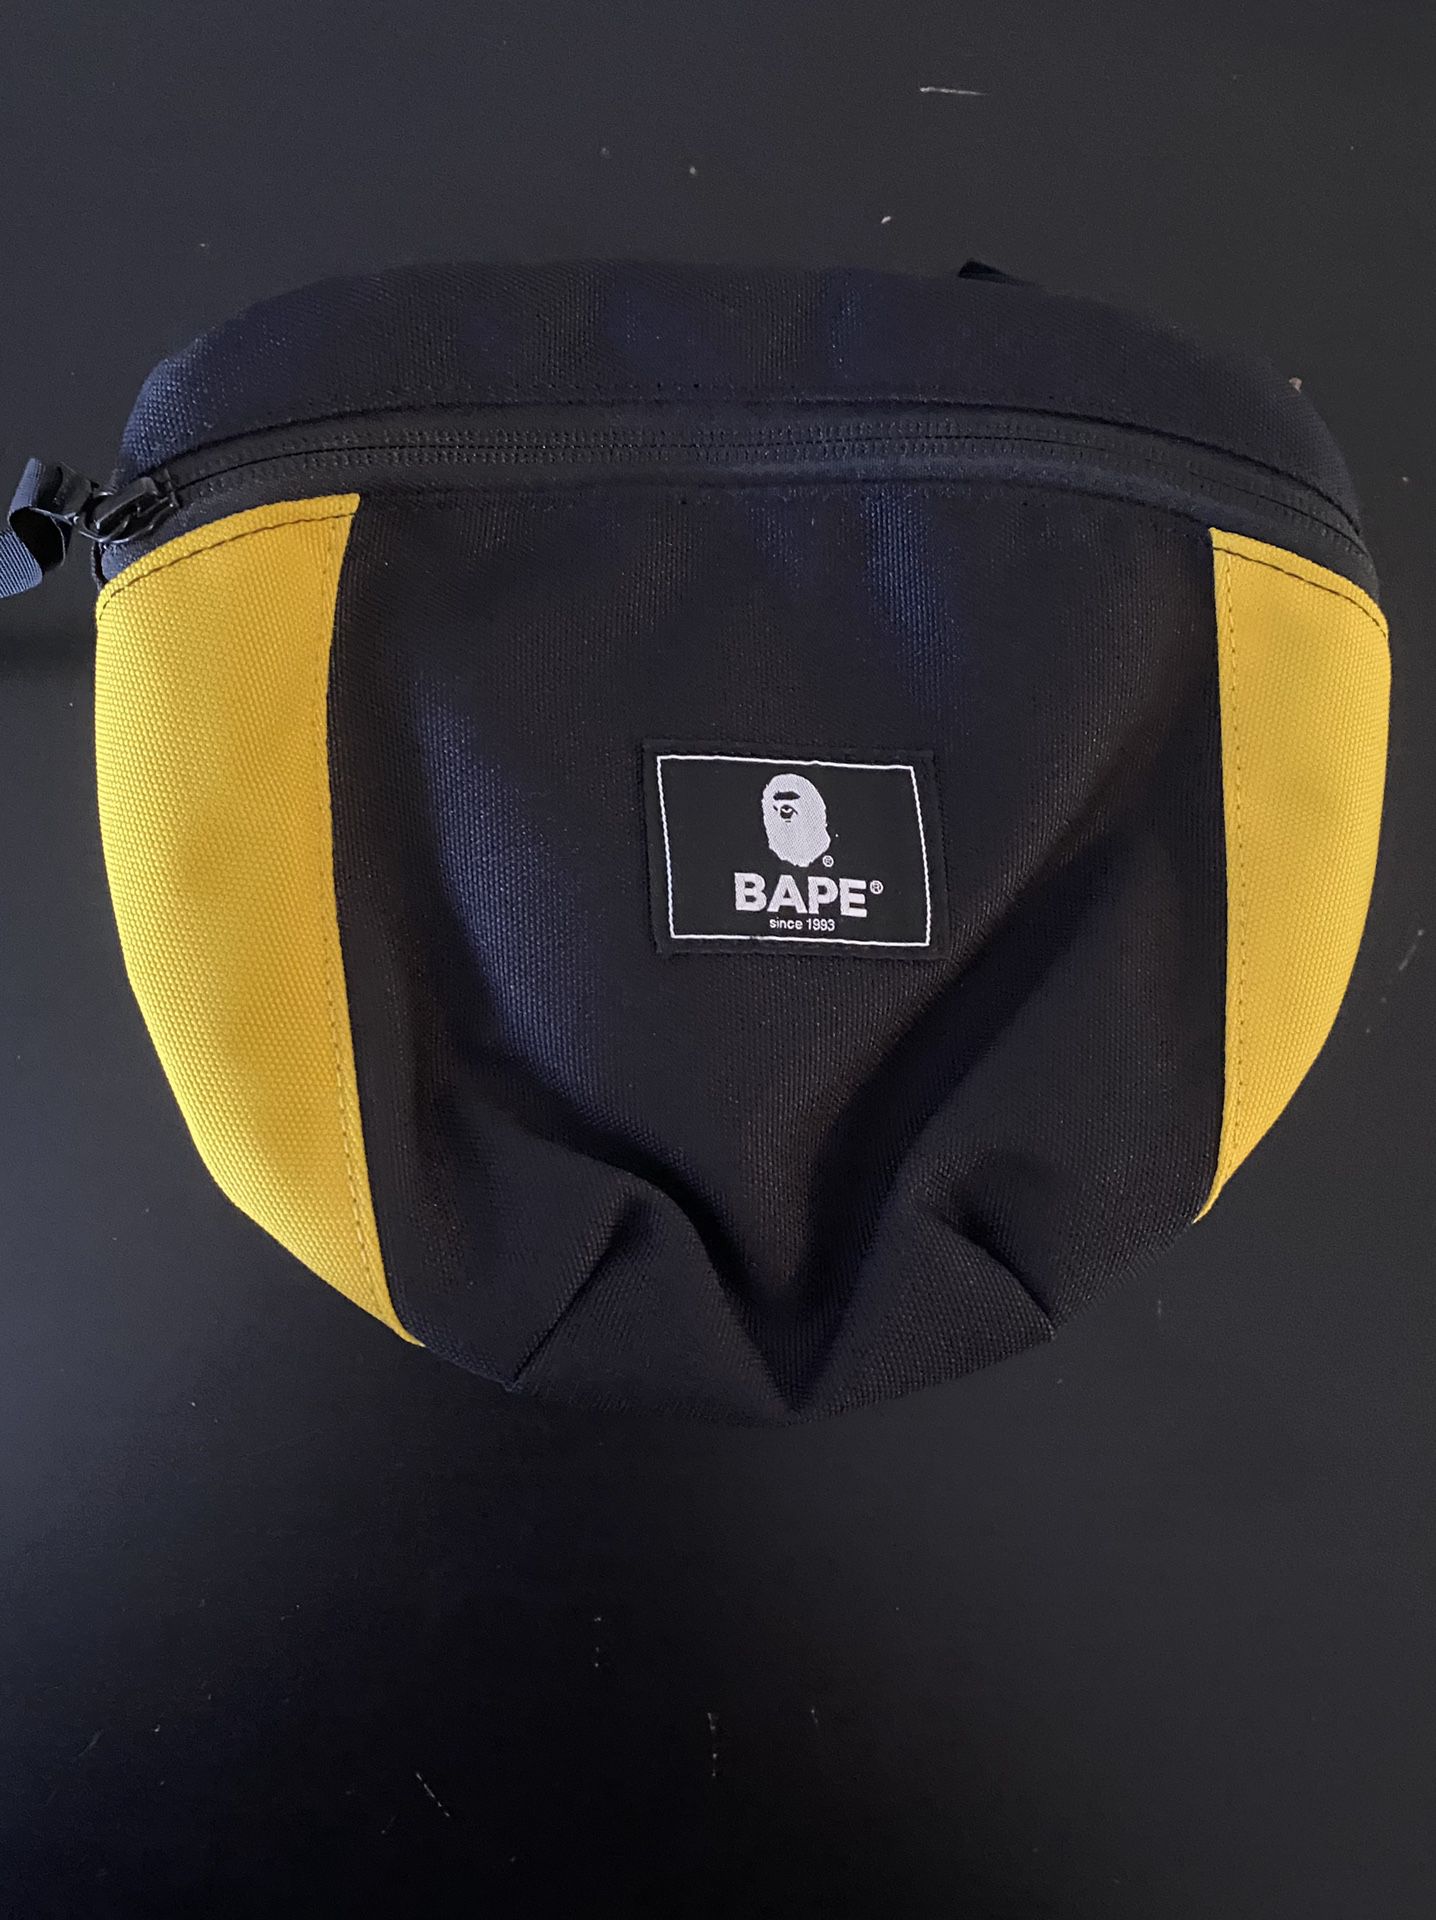 Bape shoulder bag